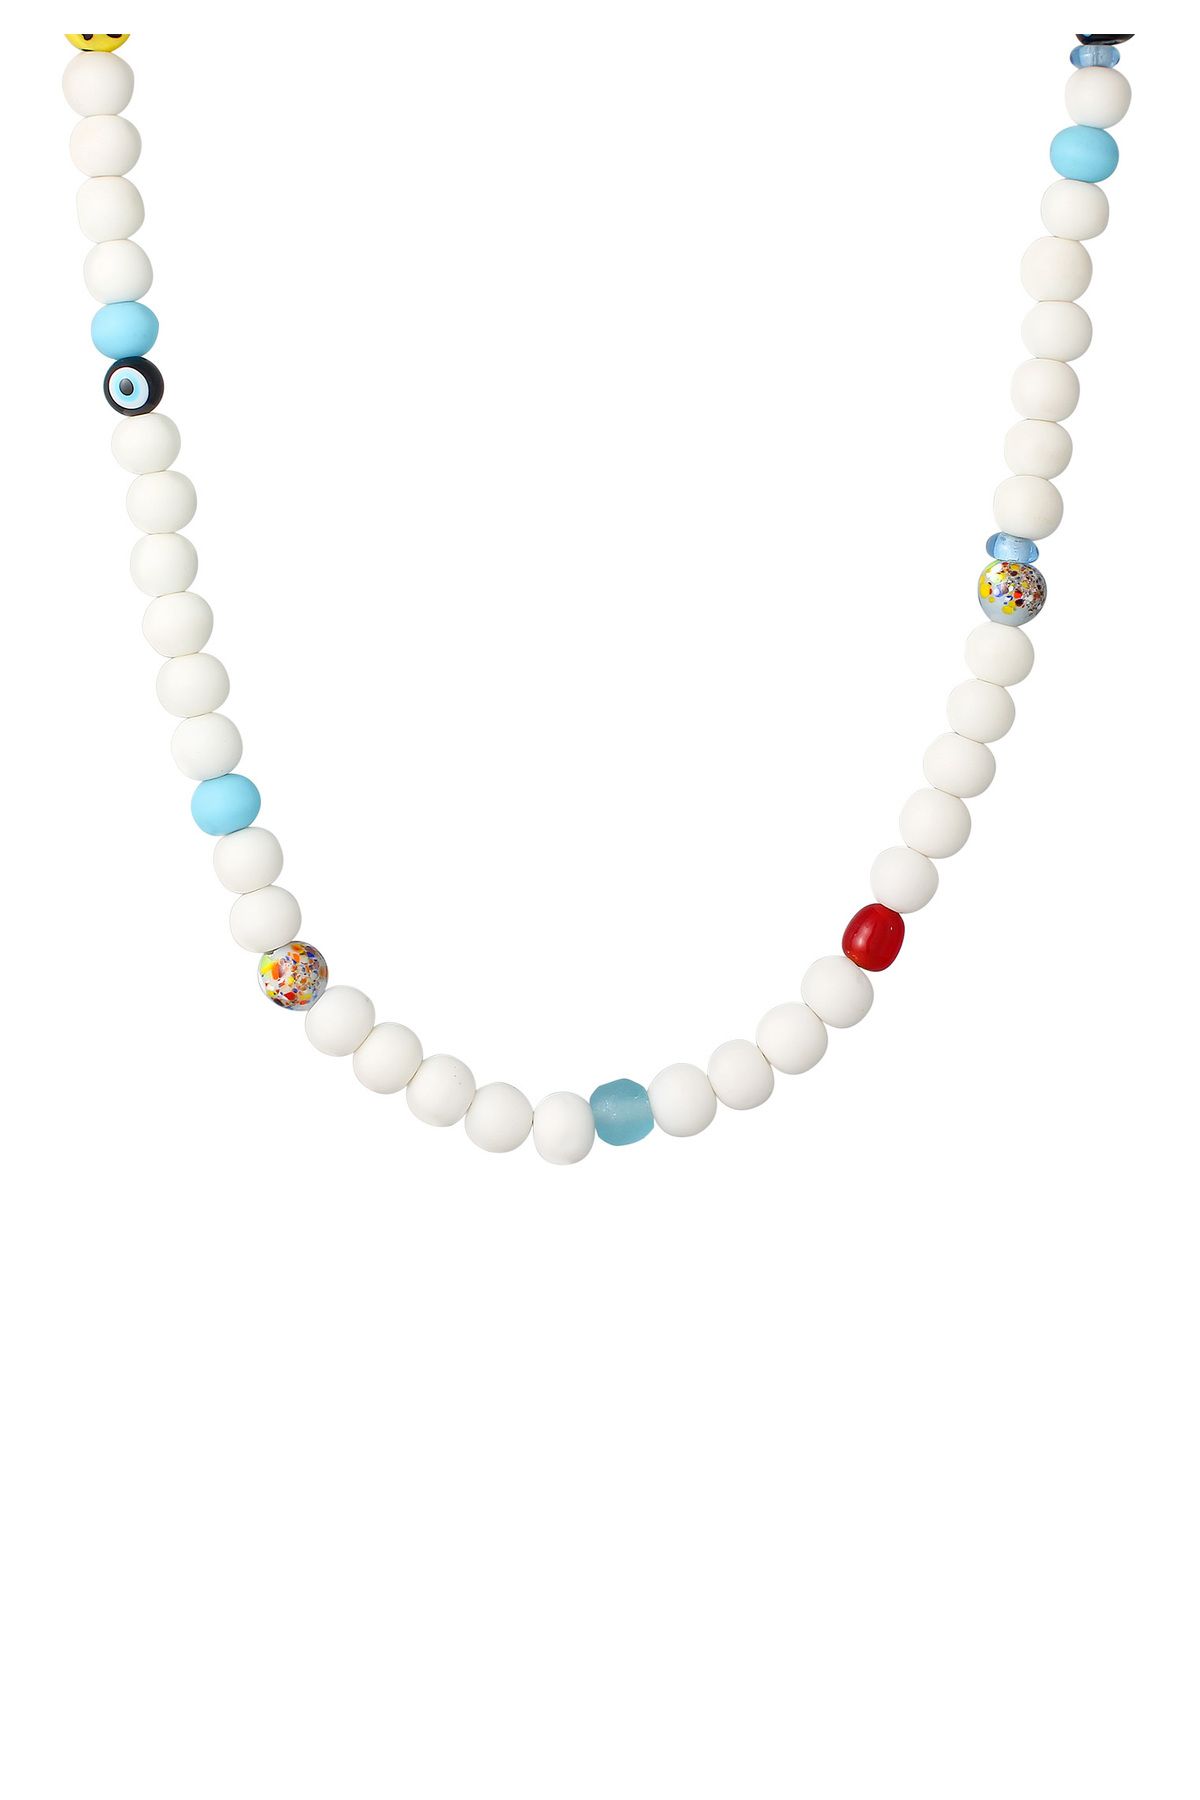 KUZZOI Halskette Smile Silber 925 Harz - Emoji Trendyol Glas Bead Perlen